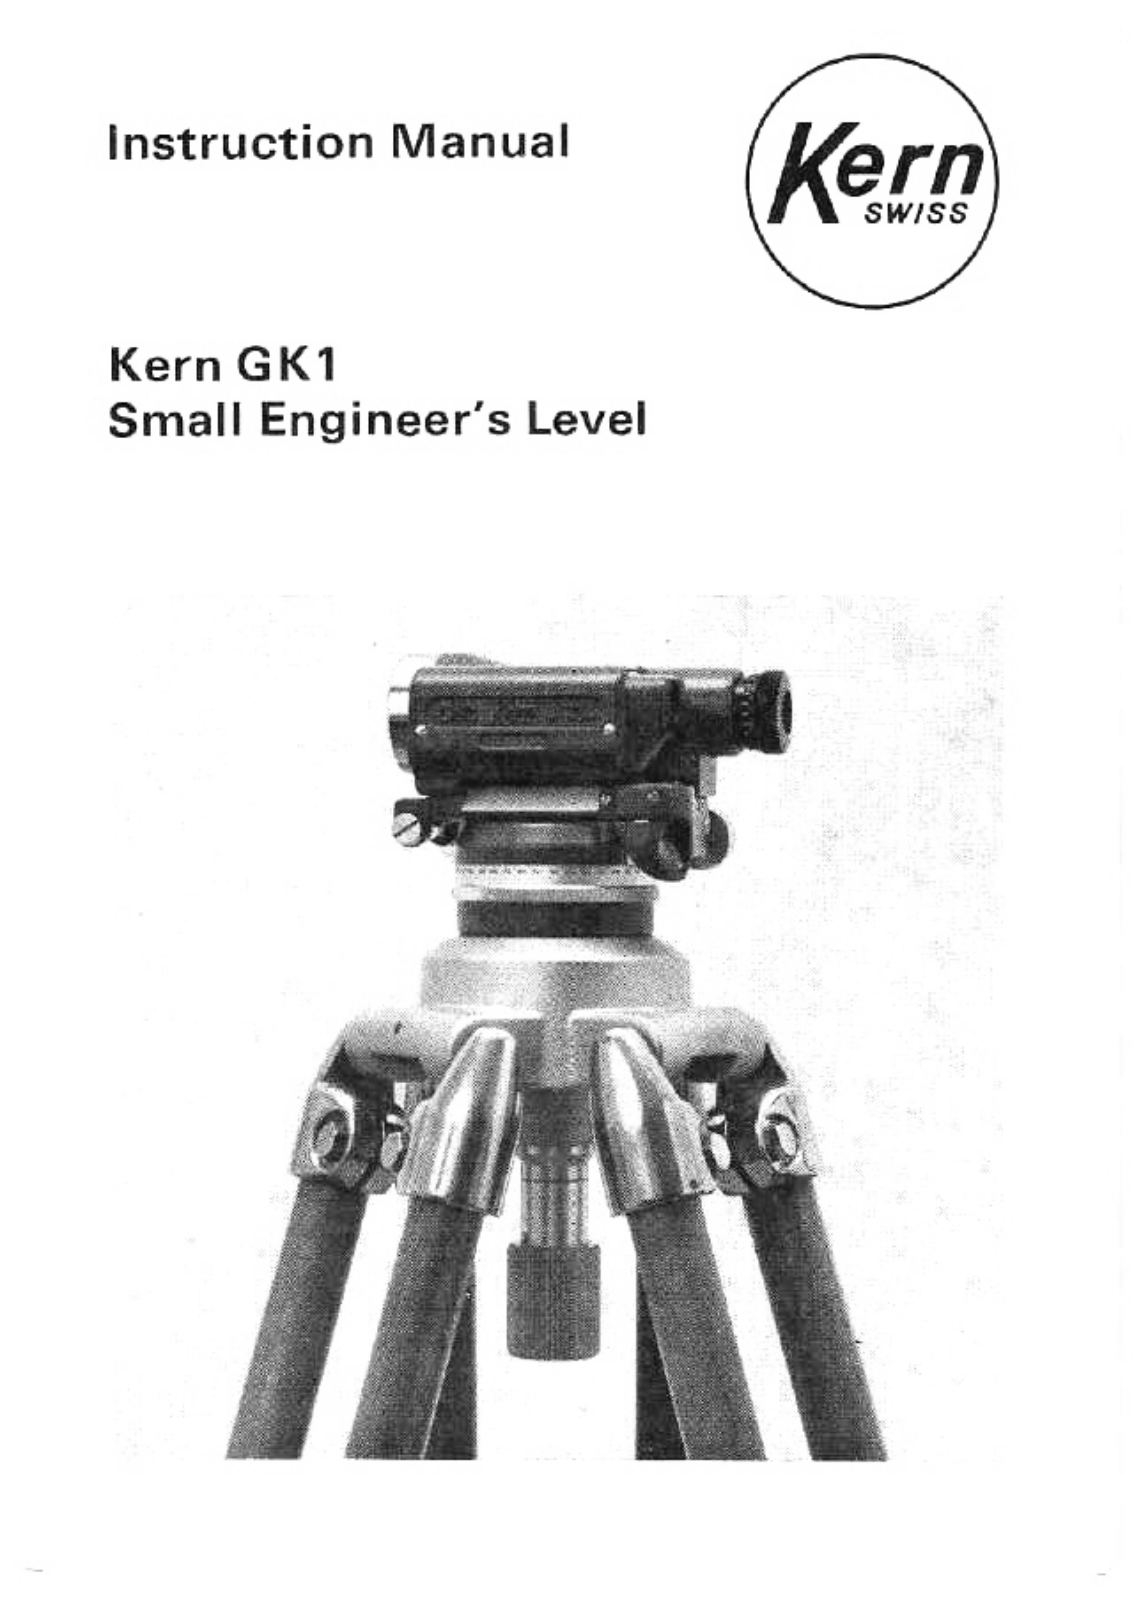 KERN GK1 Instruction Manual